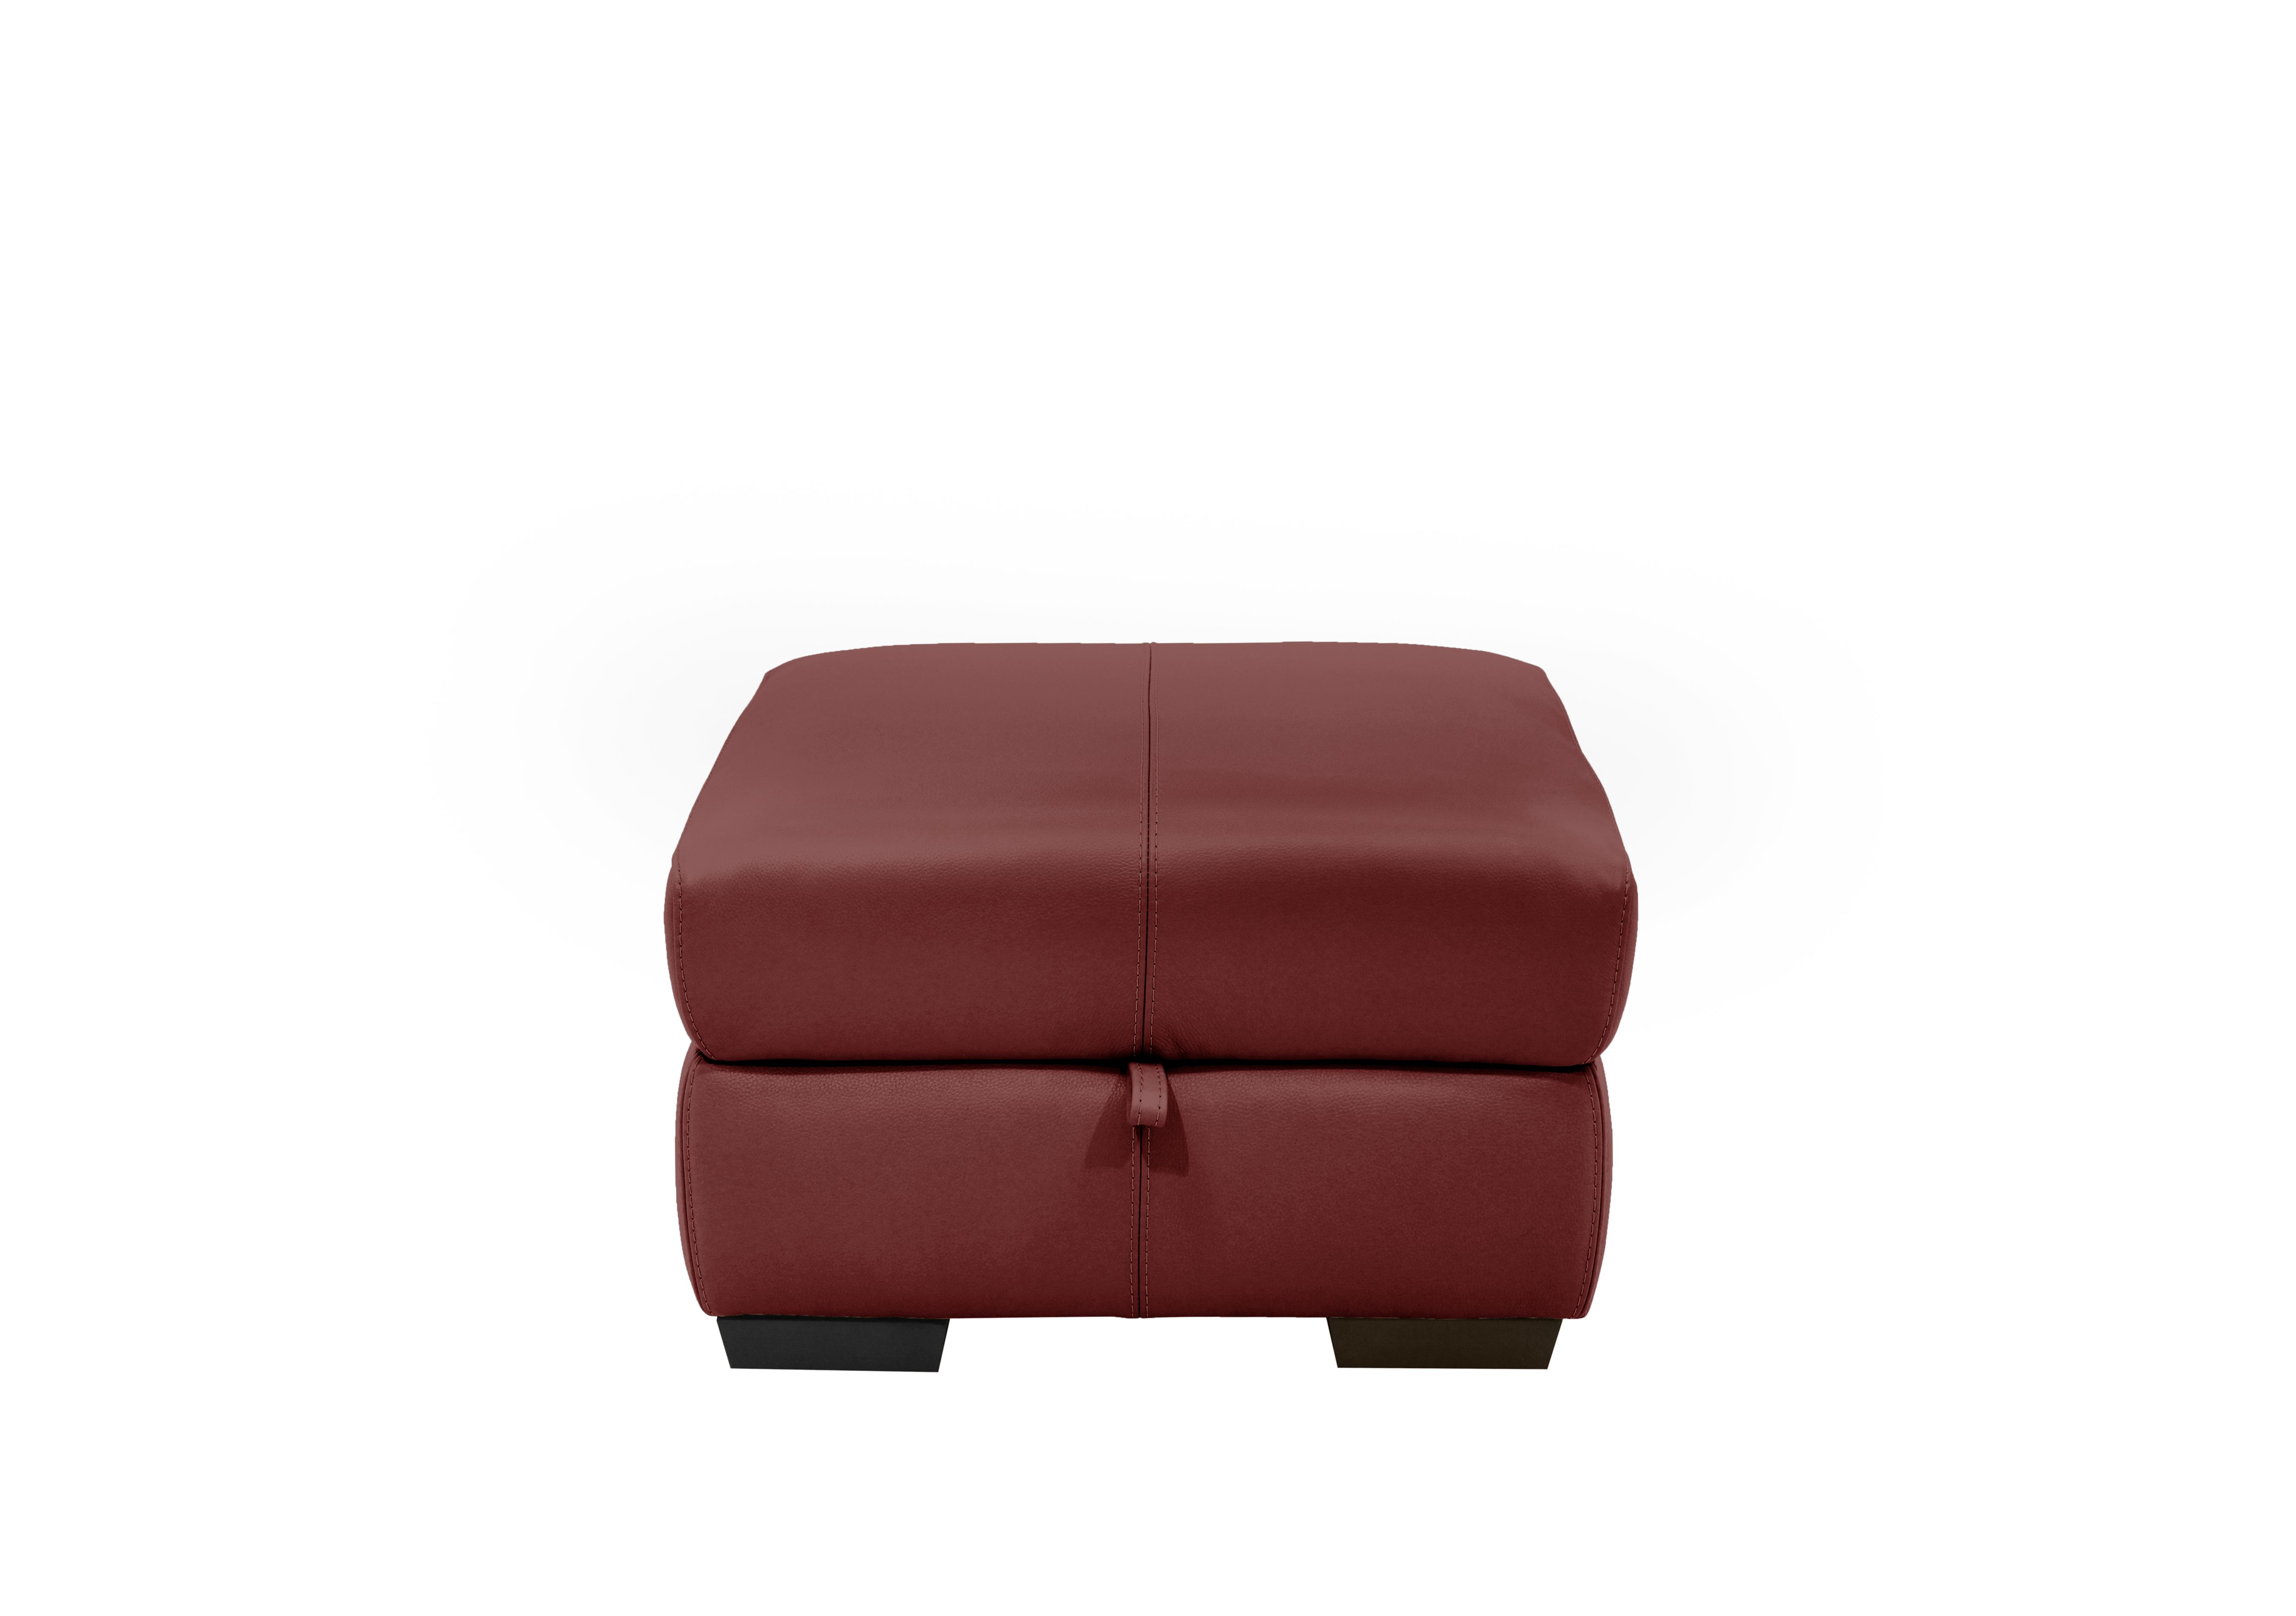 Elixir Leather Storage Footstool in Bv-035c Deep Red on Furniture Village